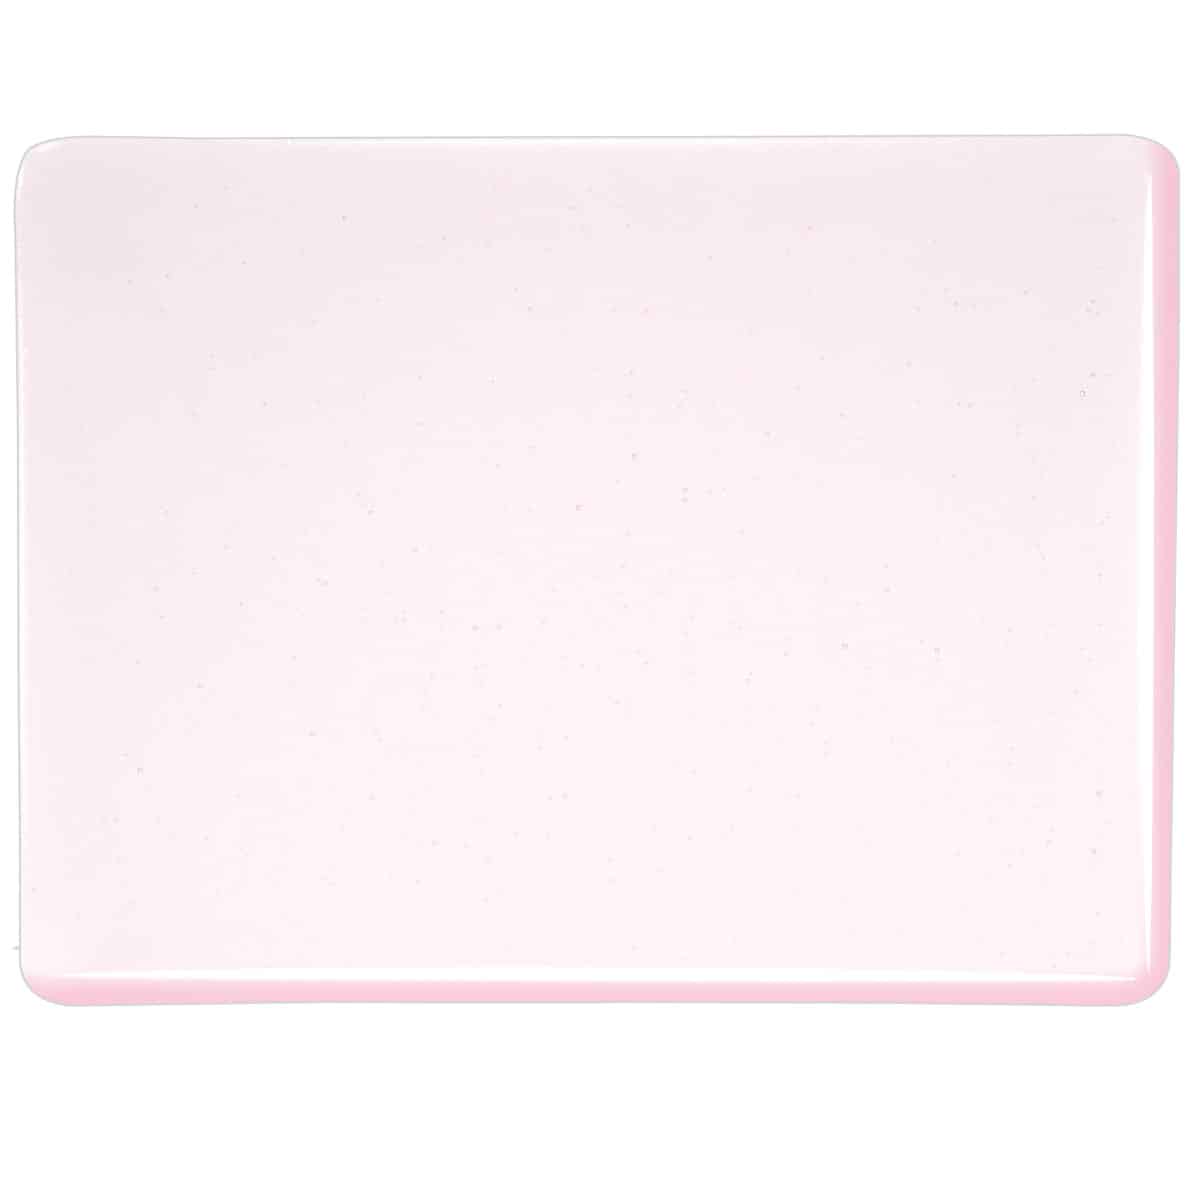 001821 Erbium Pink Tint transparent sheet glass swatch